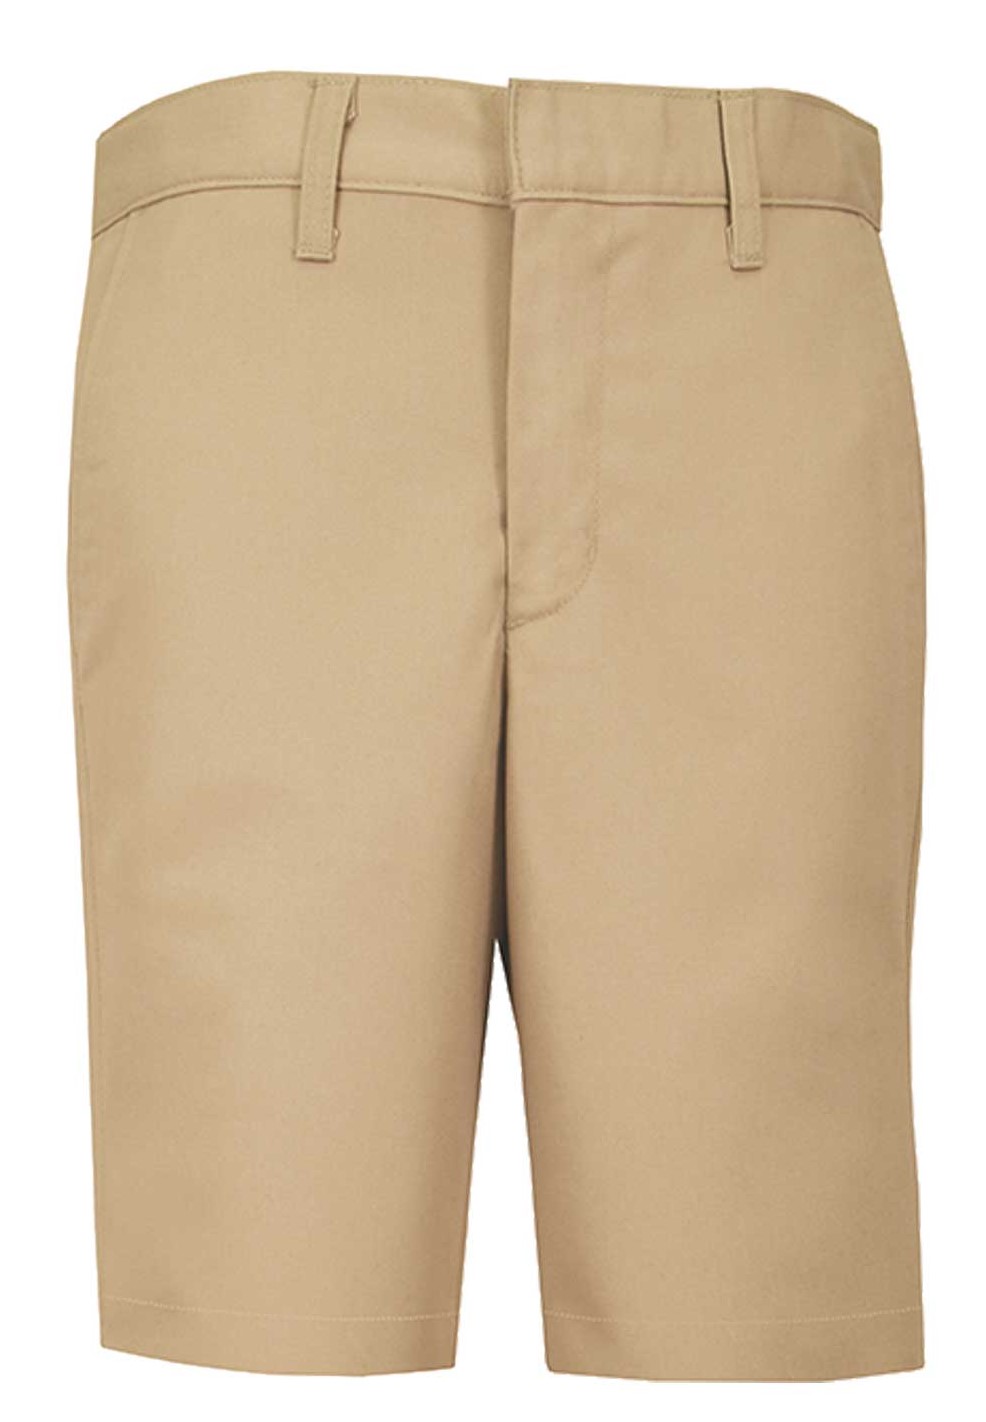 Boys Modern Fit Twill Shorts - Flat Front - #7897/7898 - Khaki